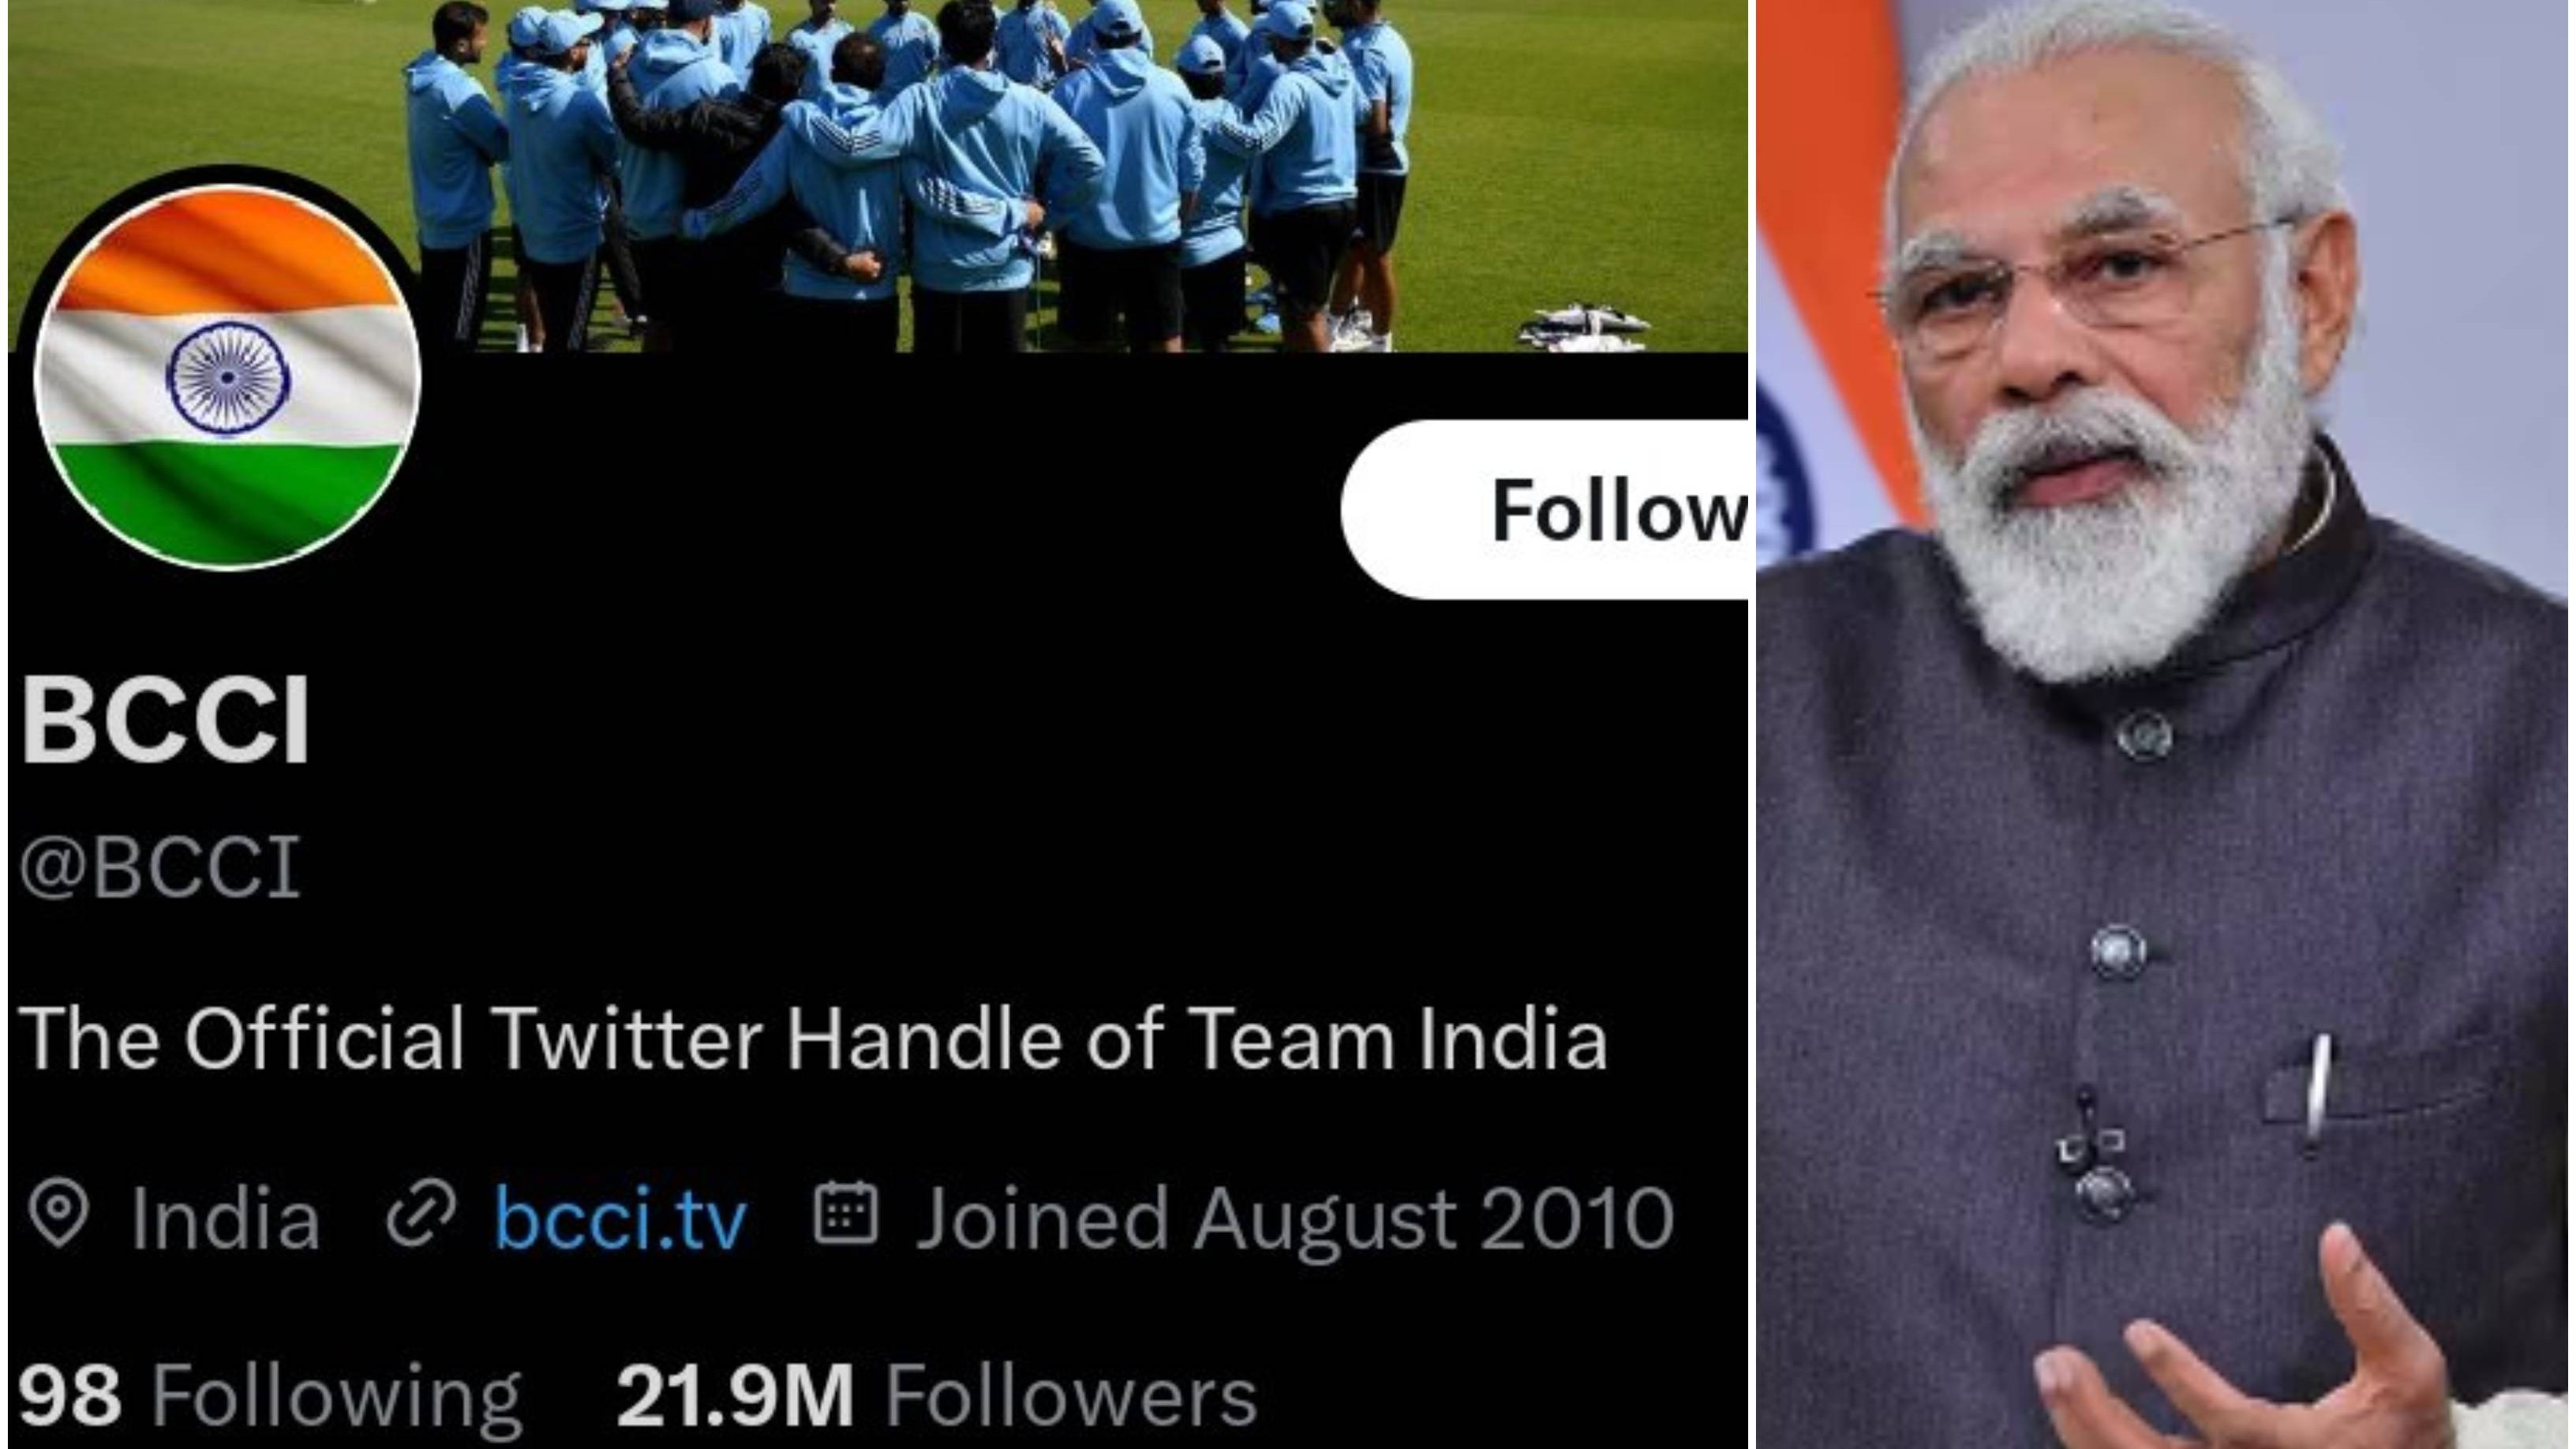 BCCI loses blue tick verification on social media platform 'X' after obeying PM Modi’s appeal